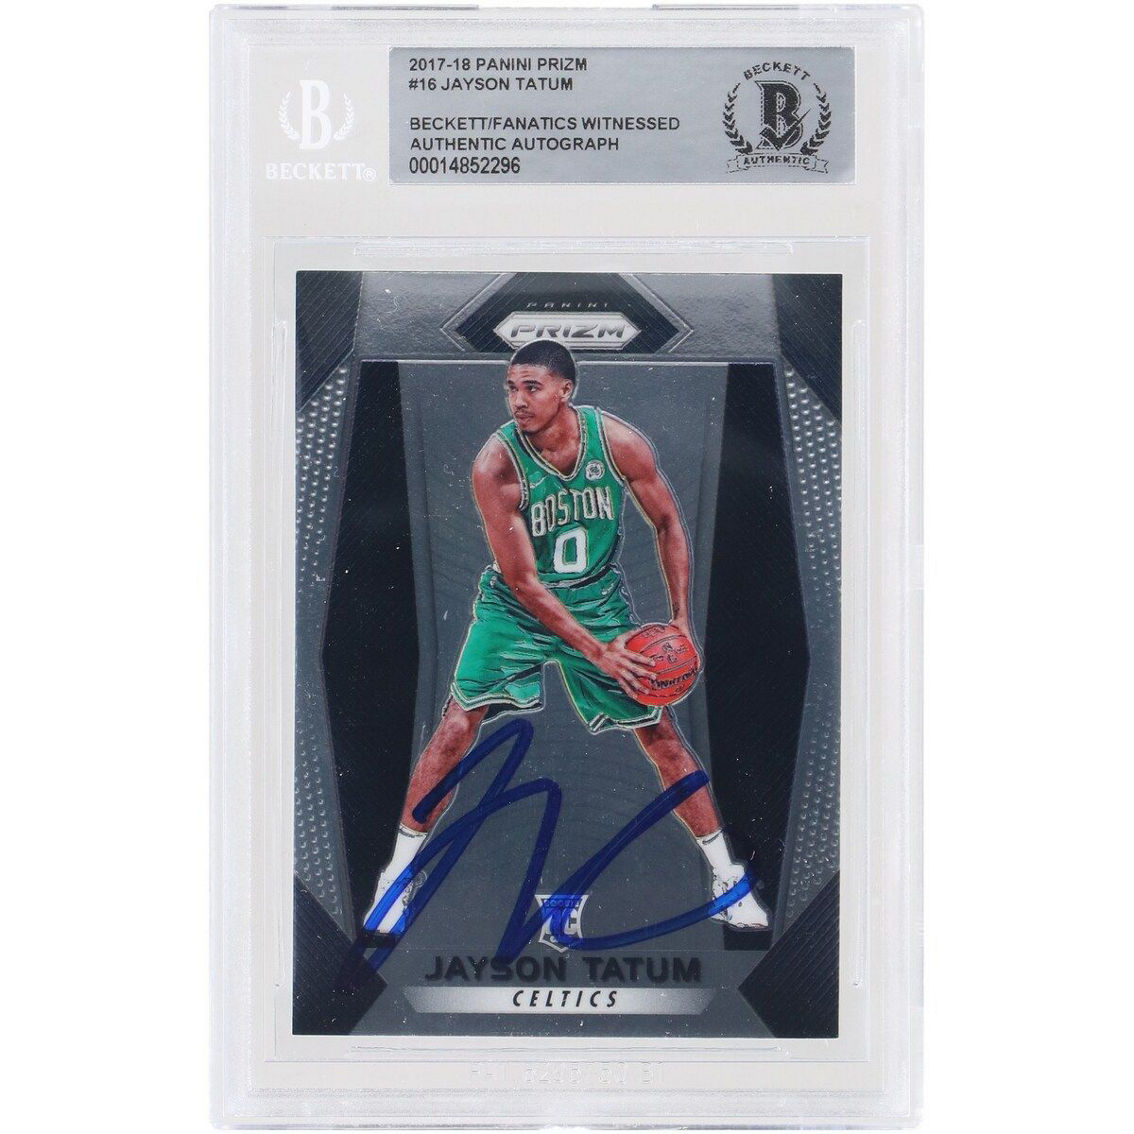 Panini America Jayson Tatum Boston Celtics Autographed 2017-18 Panini Prizm #16 Beckett Fanatics Witnessed Authenticated Rookie Card - Image 2 of 3